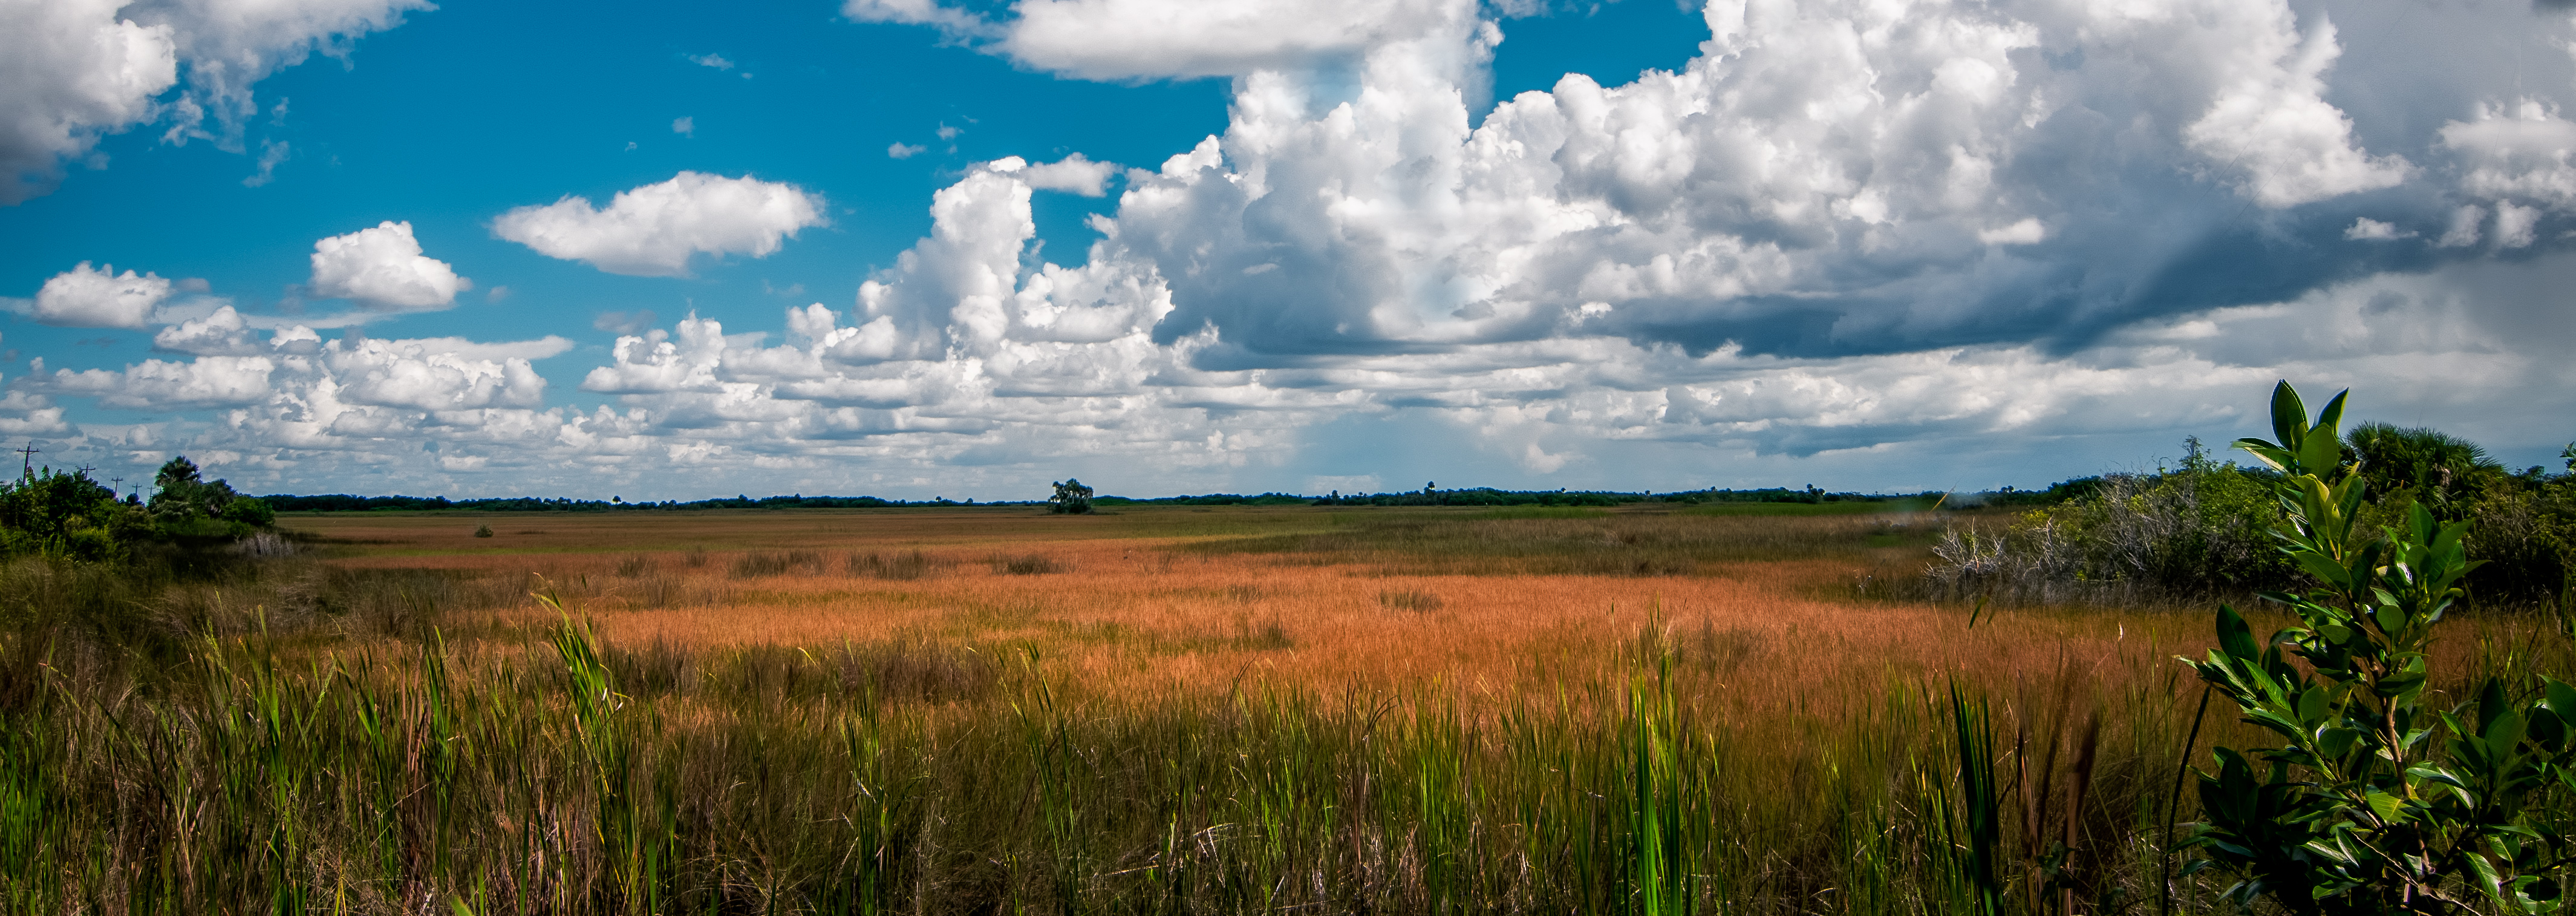 The Everglades, a River of Grass